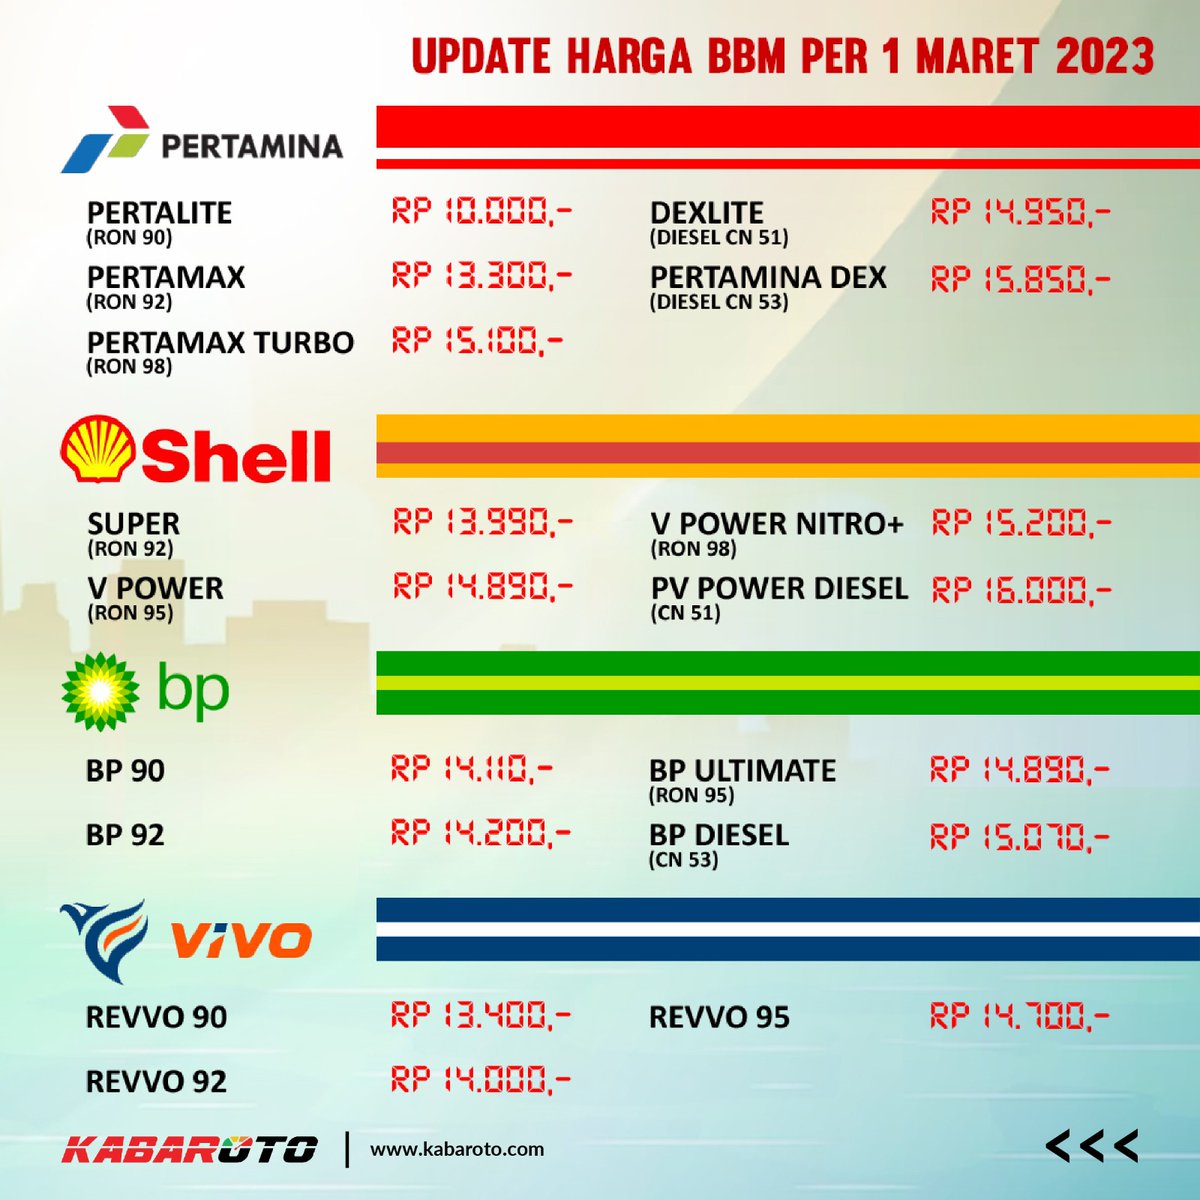 Mulai tanggal 1 Maret 2023 beberapa harga BBM naik, tak hanya dari pertamina yang menaikan harga, namun SPBU swasta pun ikut naik. Ini dia daftar harganya, Sob!

#kabarotocom #bbm #updatehargabbm #hargabbm #bbmnaik #bbmsubsidi #spbu #pertamina #shell #vivo #bpakr